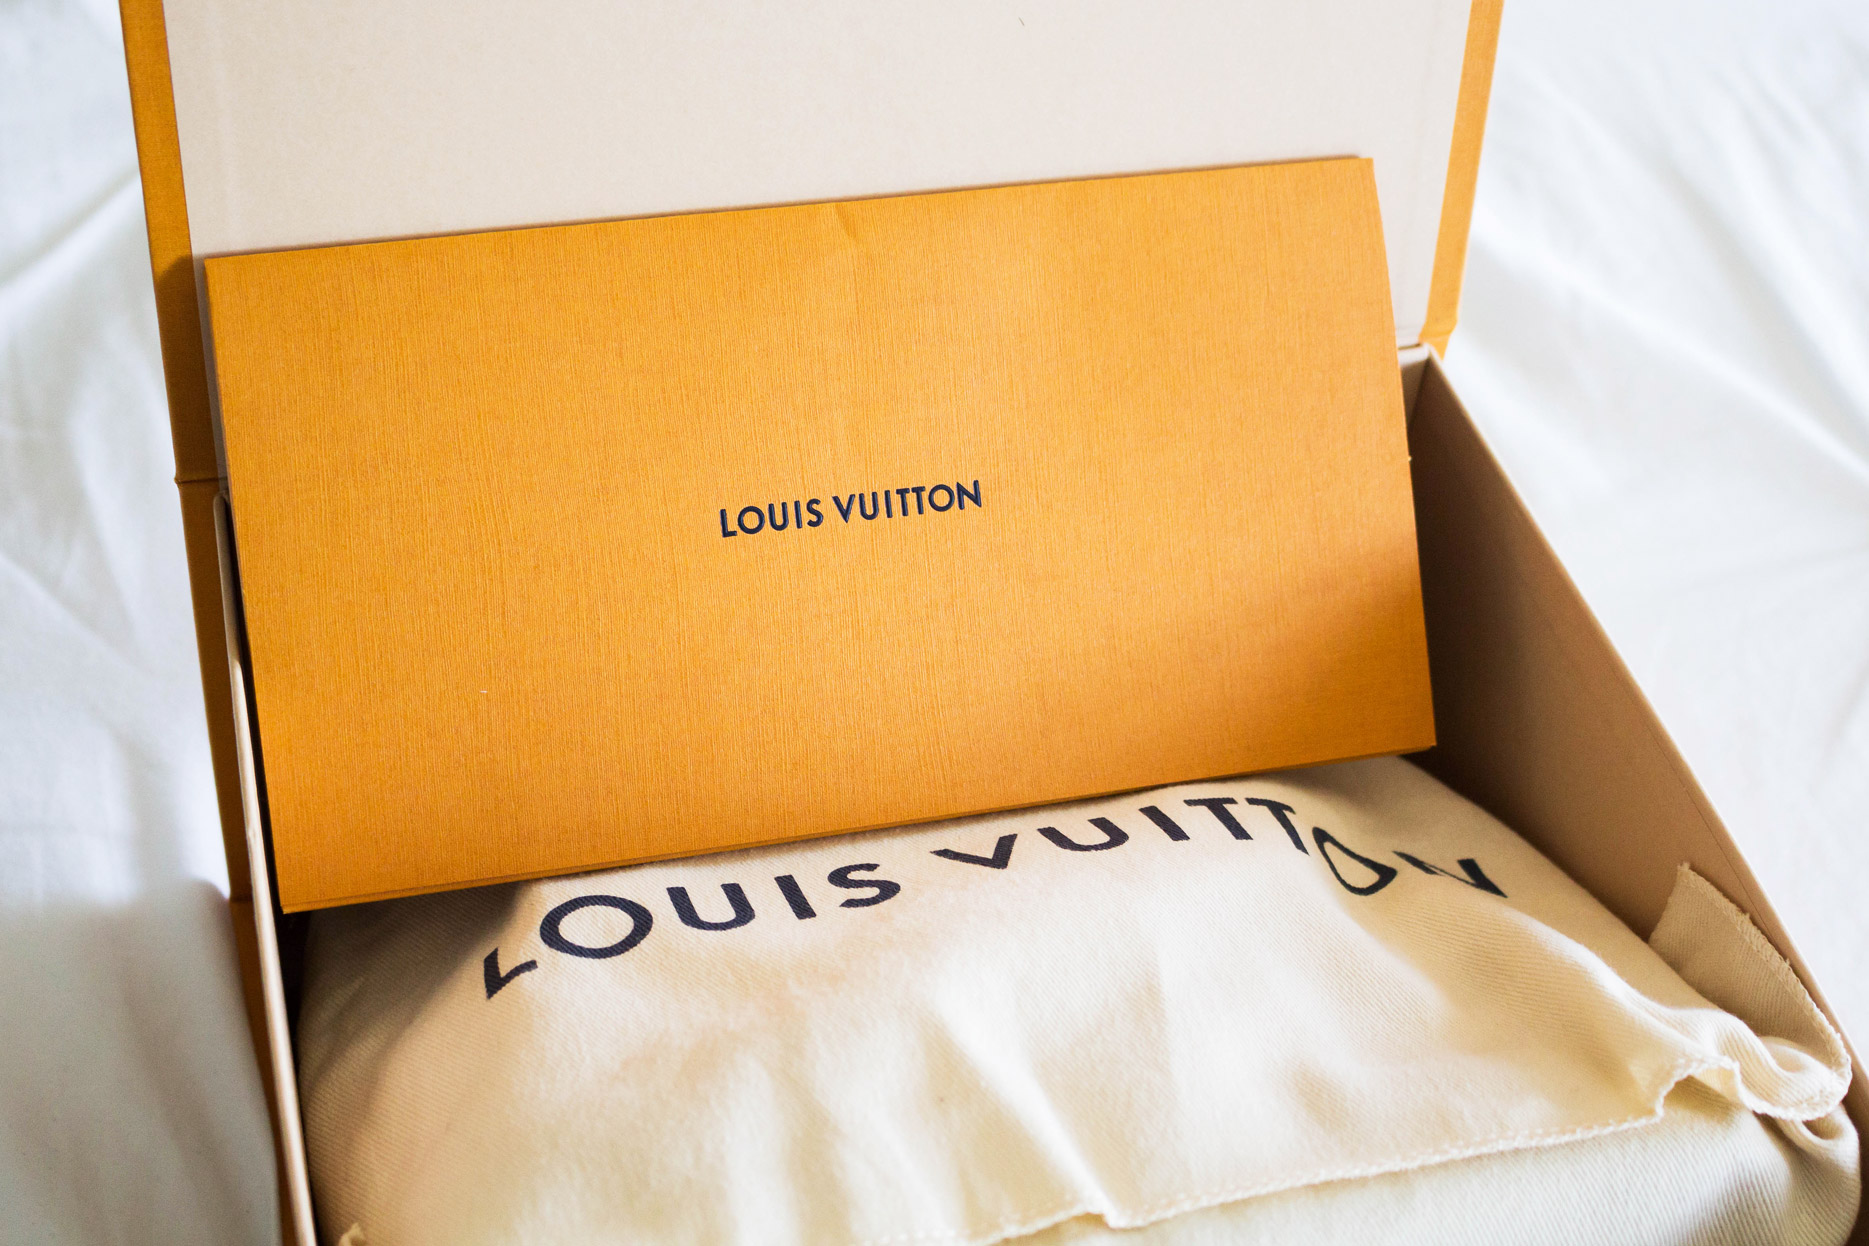 LOUIS VUITTON UNBOXING, Purchasing A Luxury Item